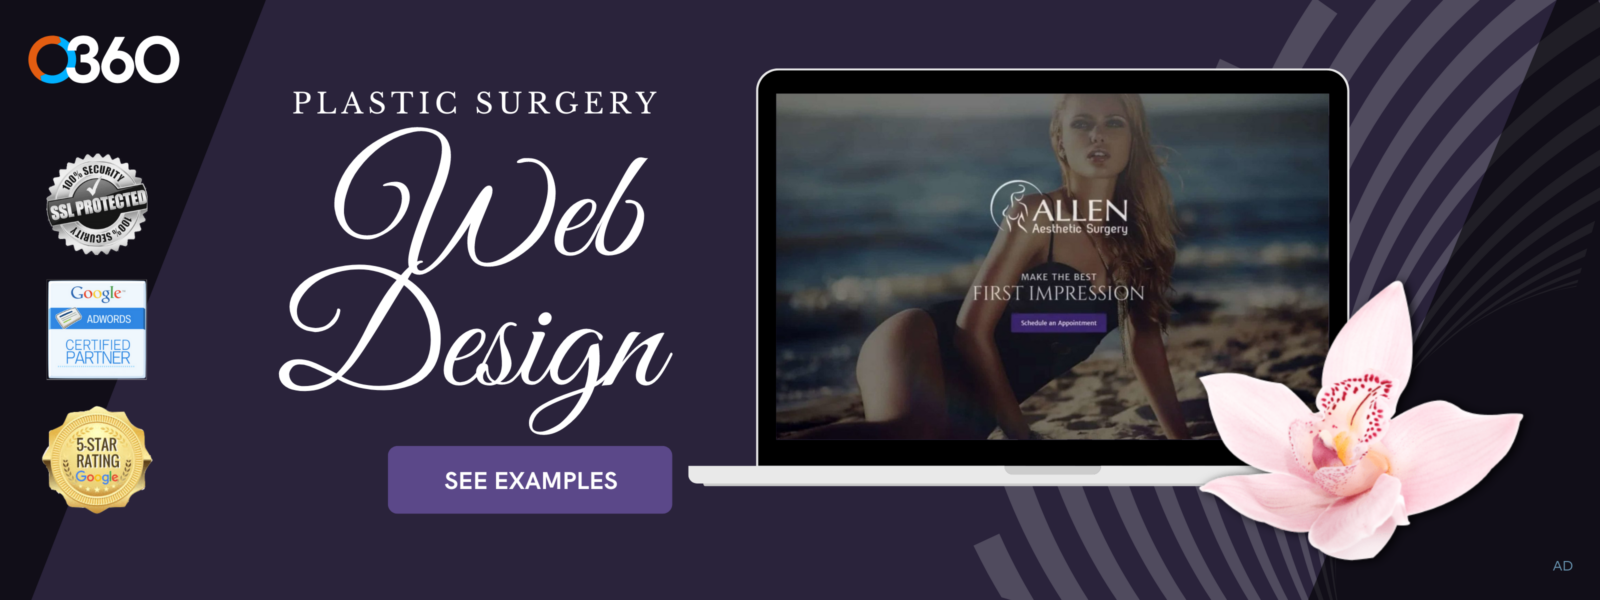 Plastic surgery web design o360 ad